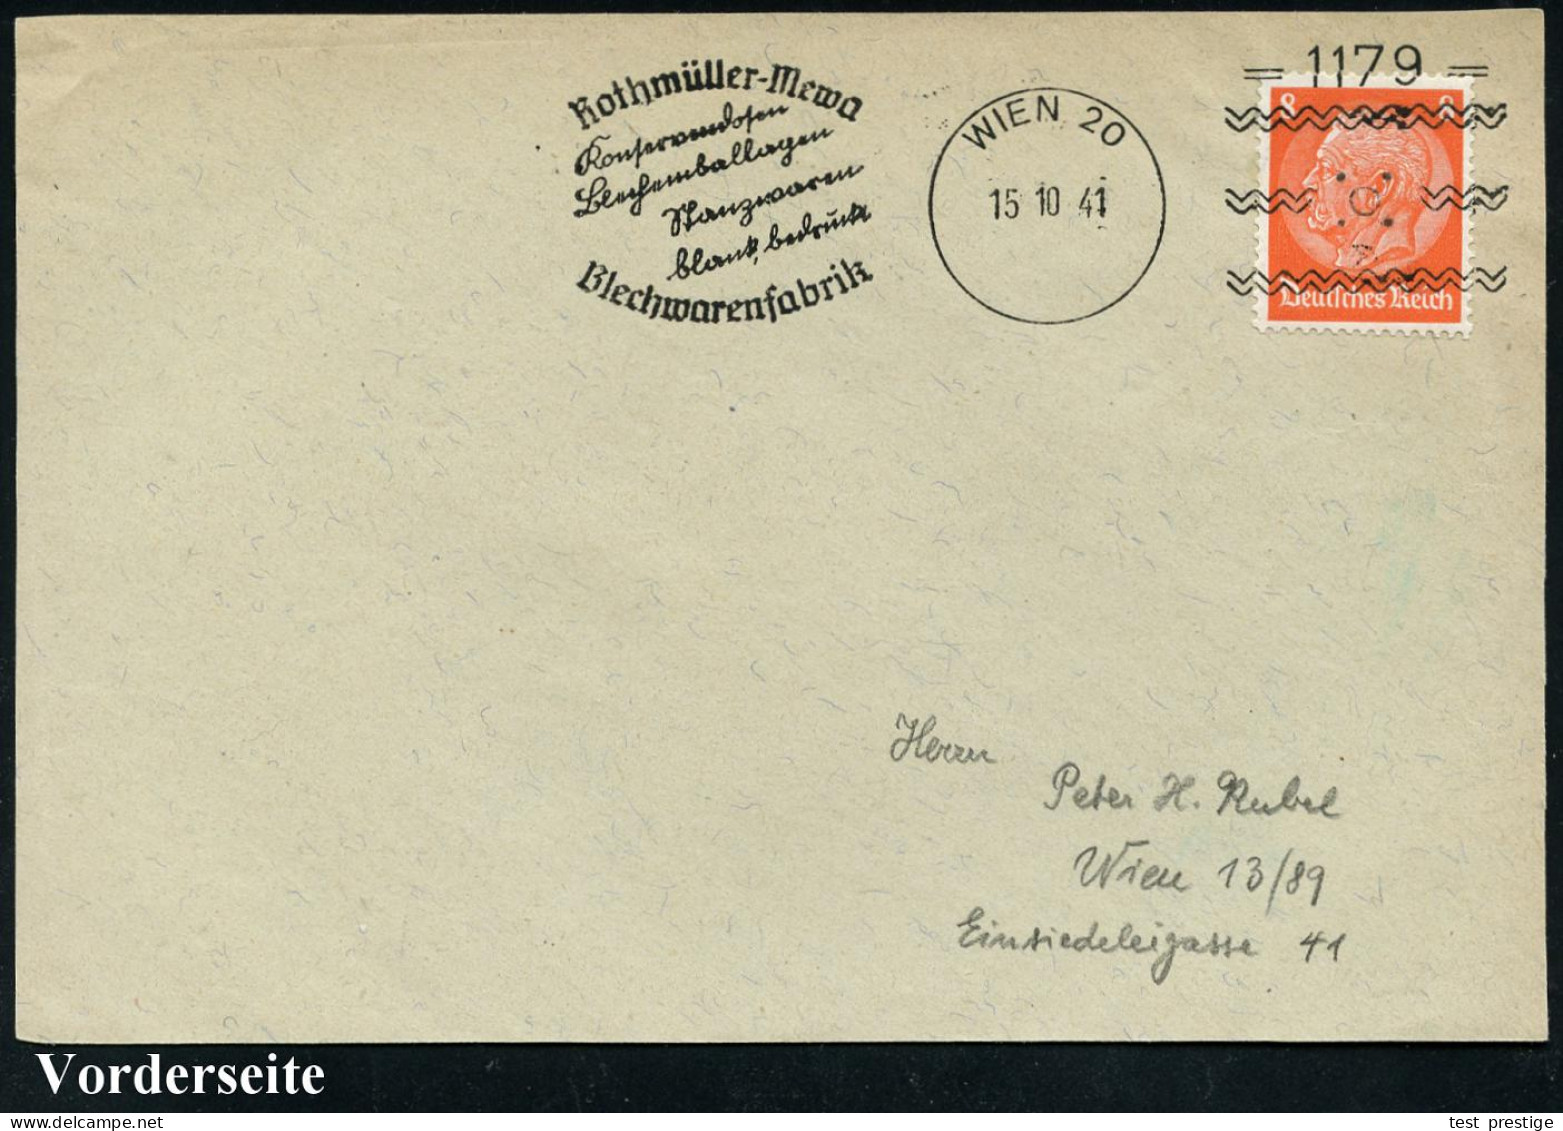 WIEN 20/ =1179=/ Rothmüller-Mewa/ Konservendosen/ ..Stanzwaren/ Blank,bedruckt/ Blechwarenfabrik 1941 (15.10.) Seltener  - Autres